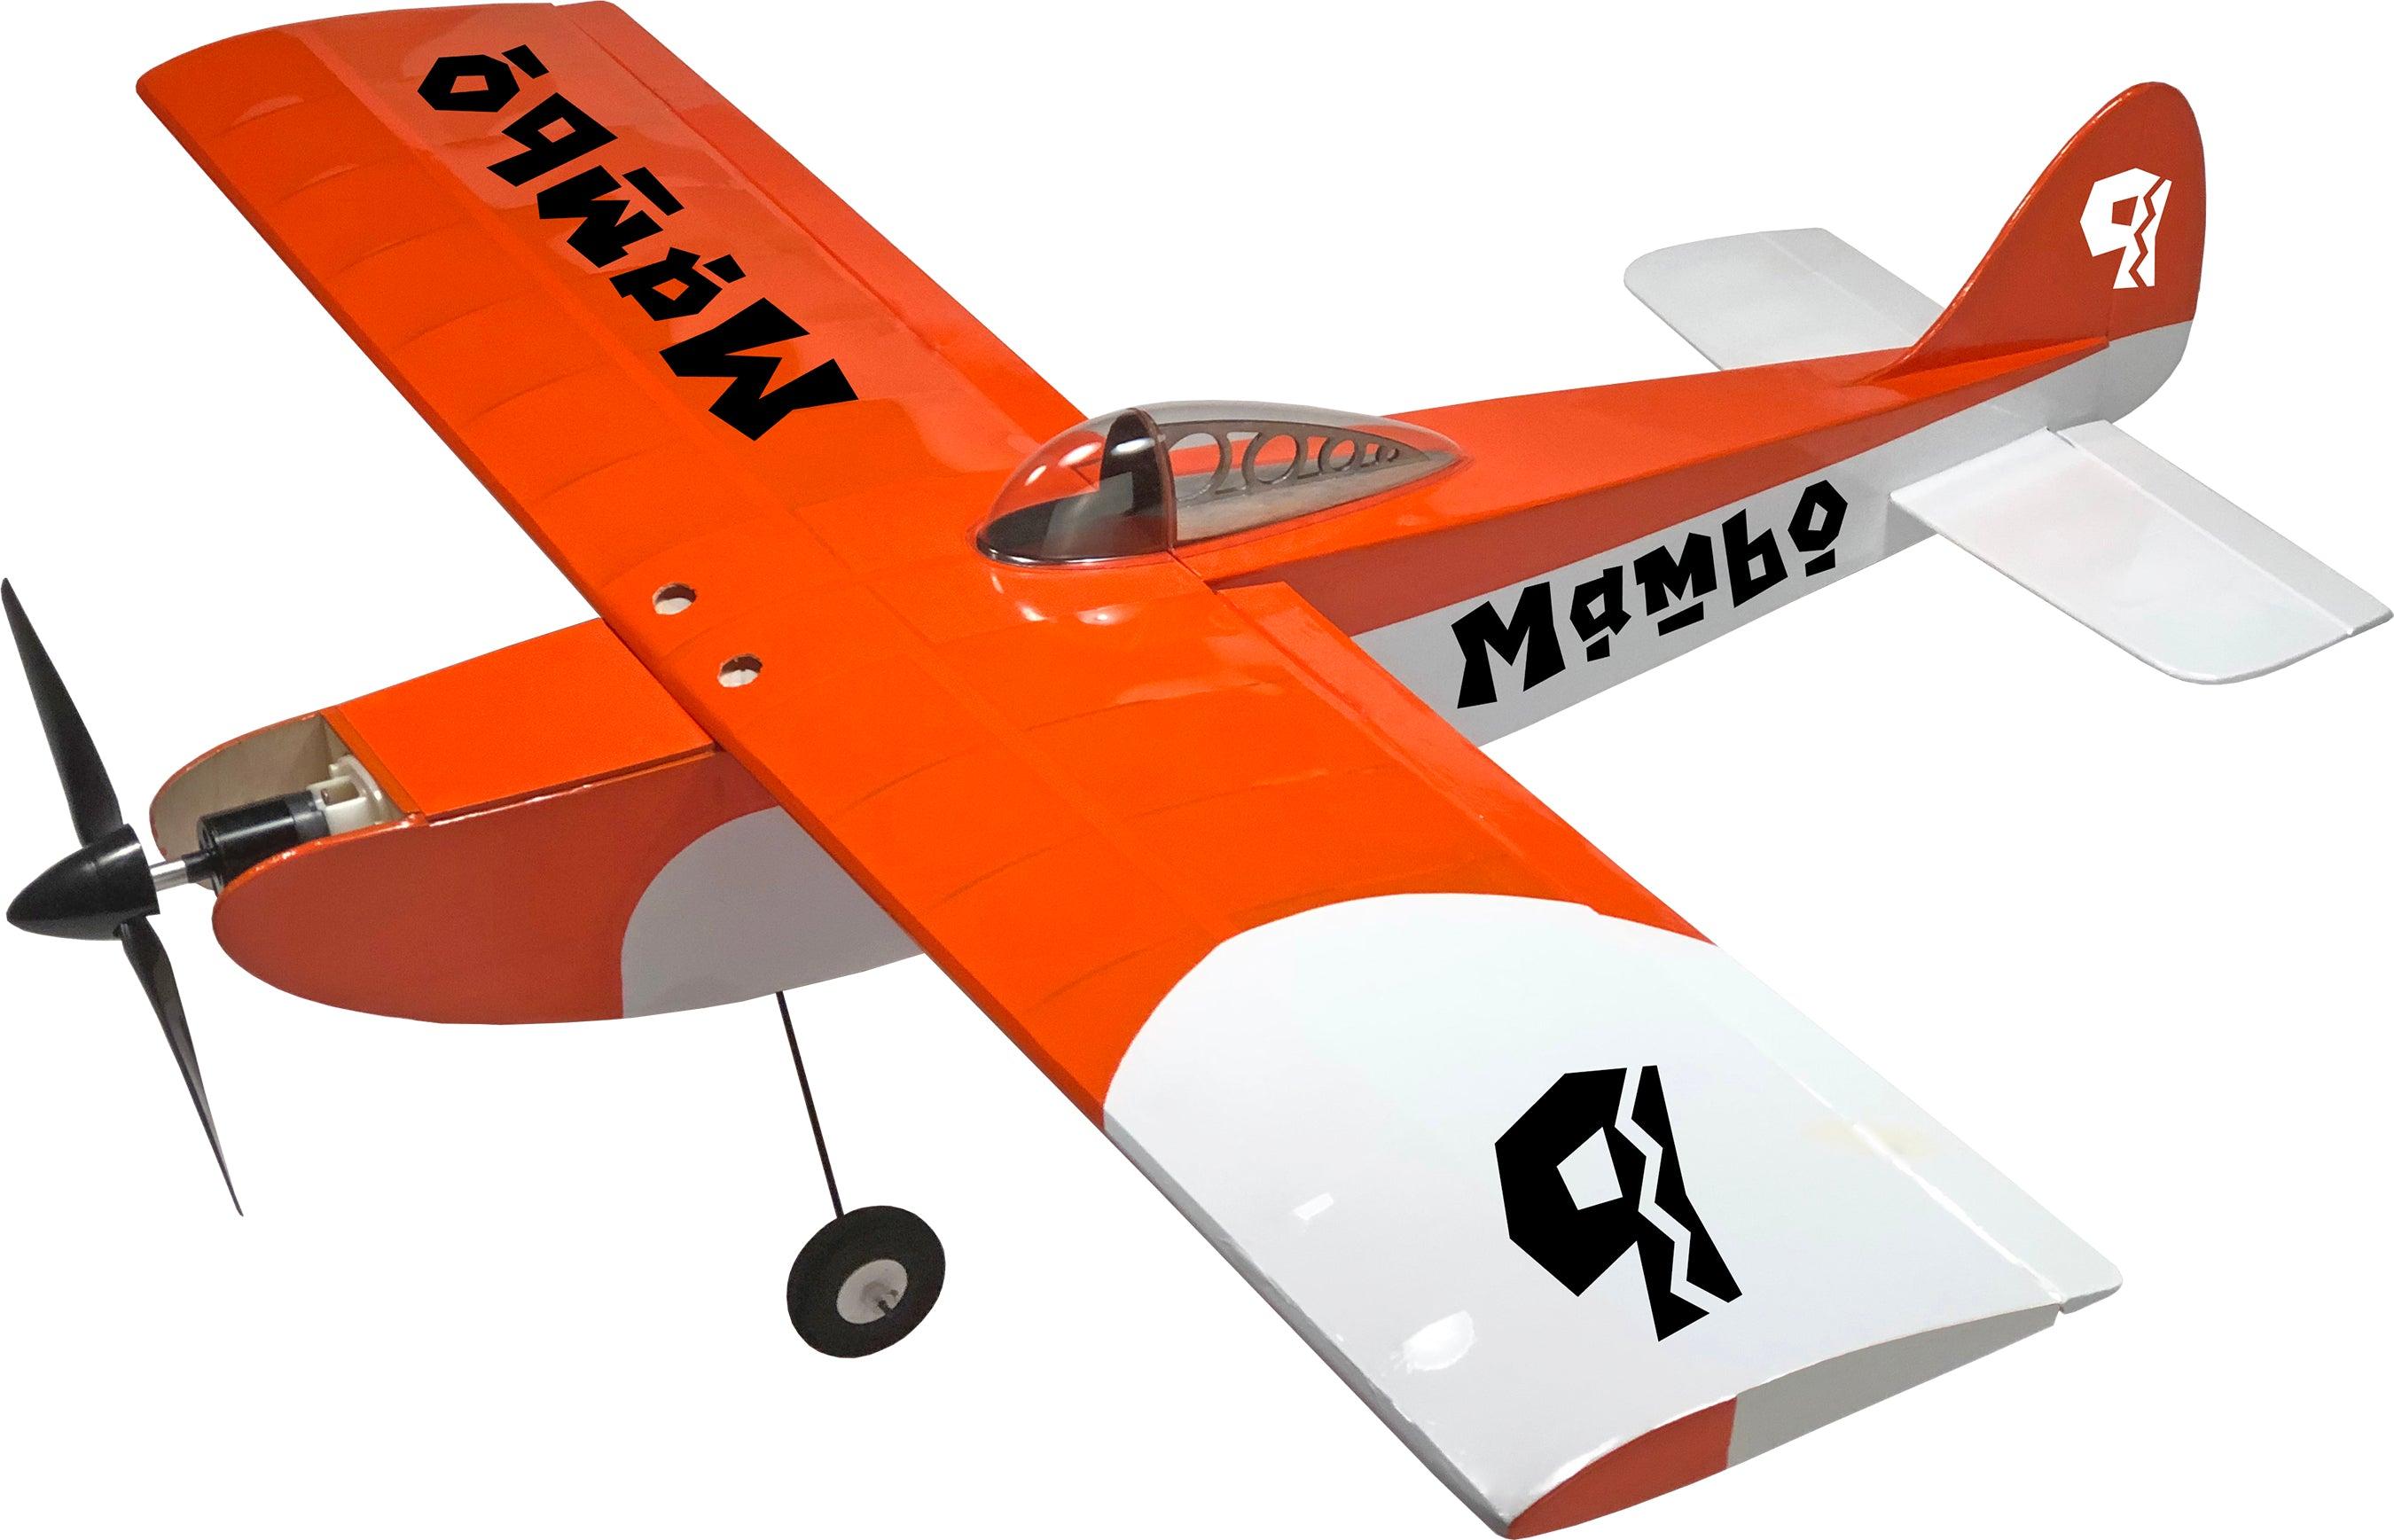 Flyable Model Airplane Kits: Flyable model airplane kits: A comprehensive guide.